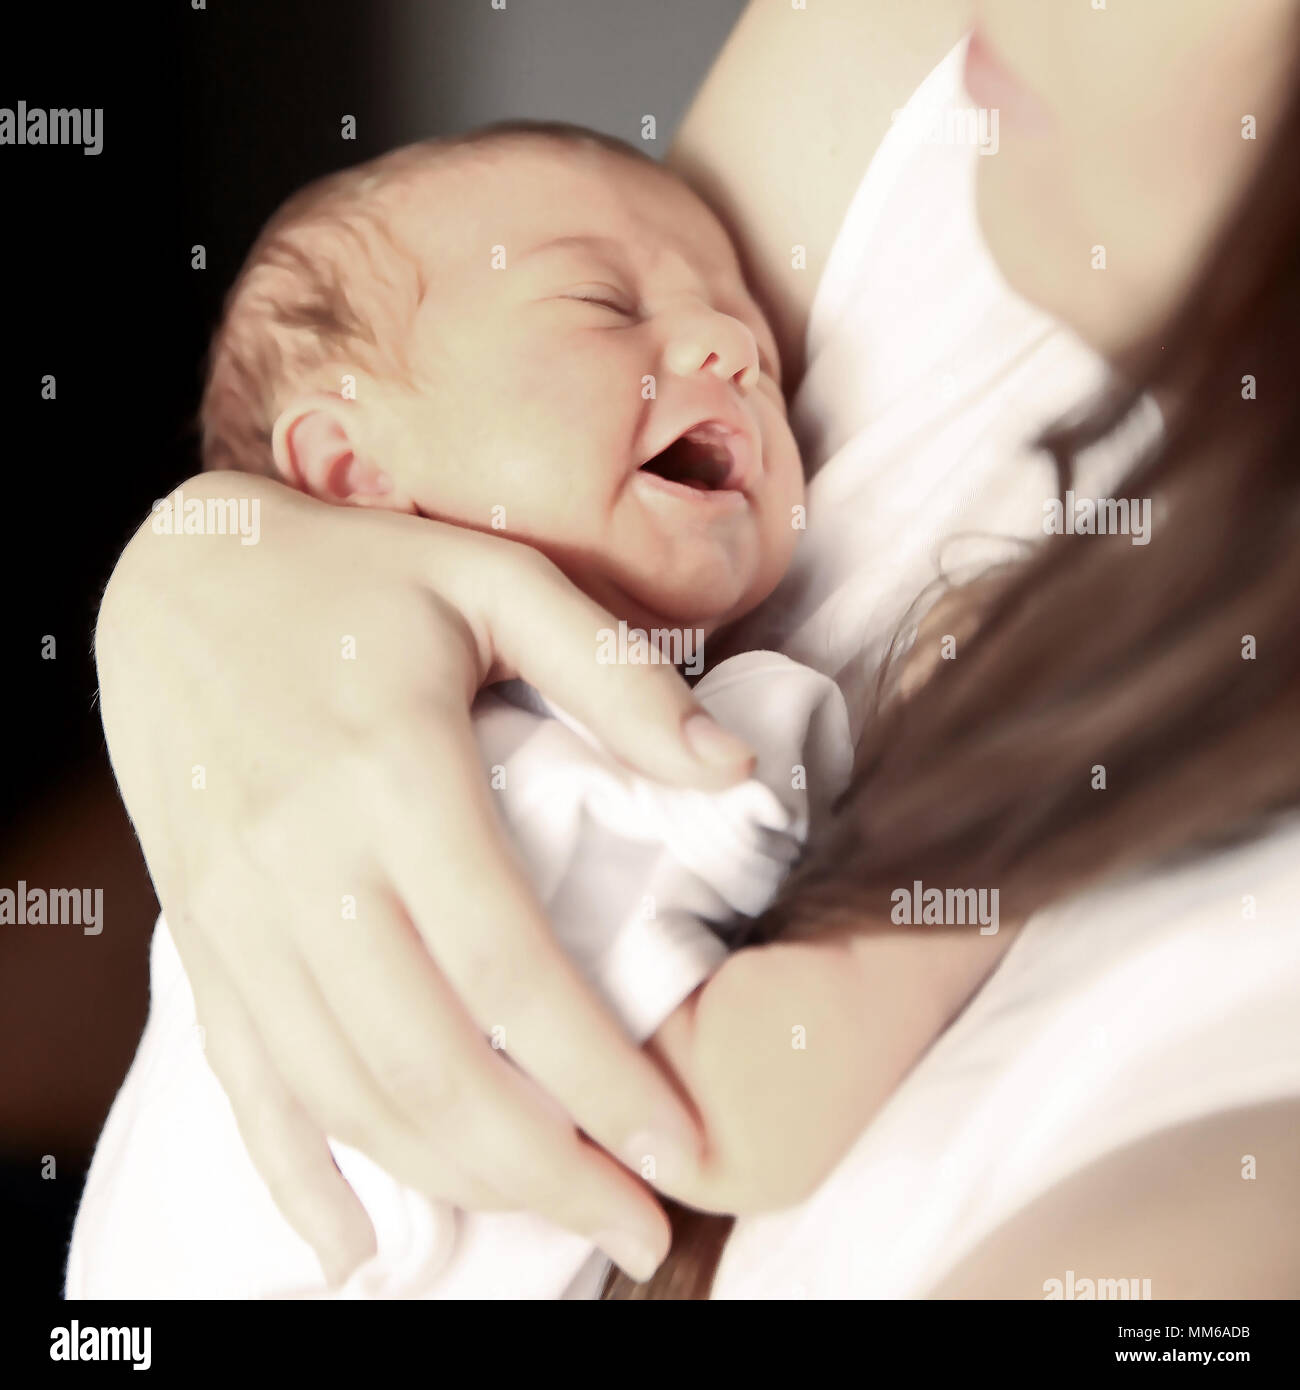 concept of maternal - newborn baby on hands at mum Stock Photo